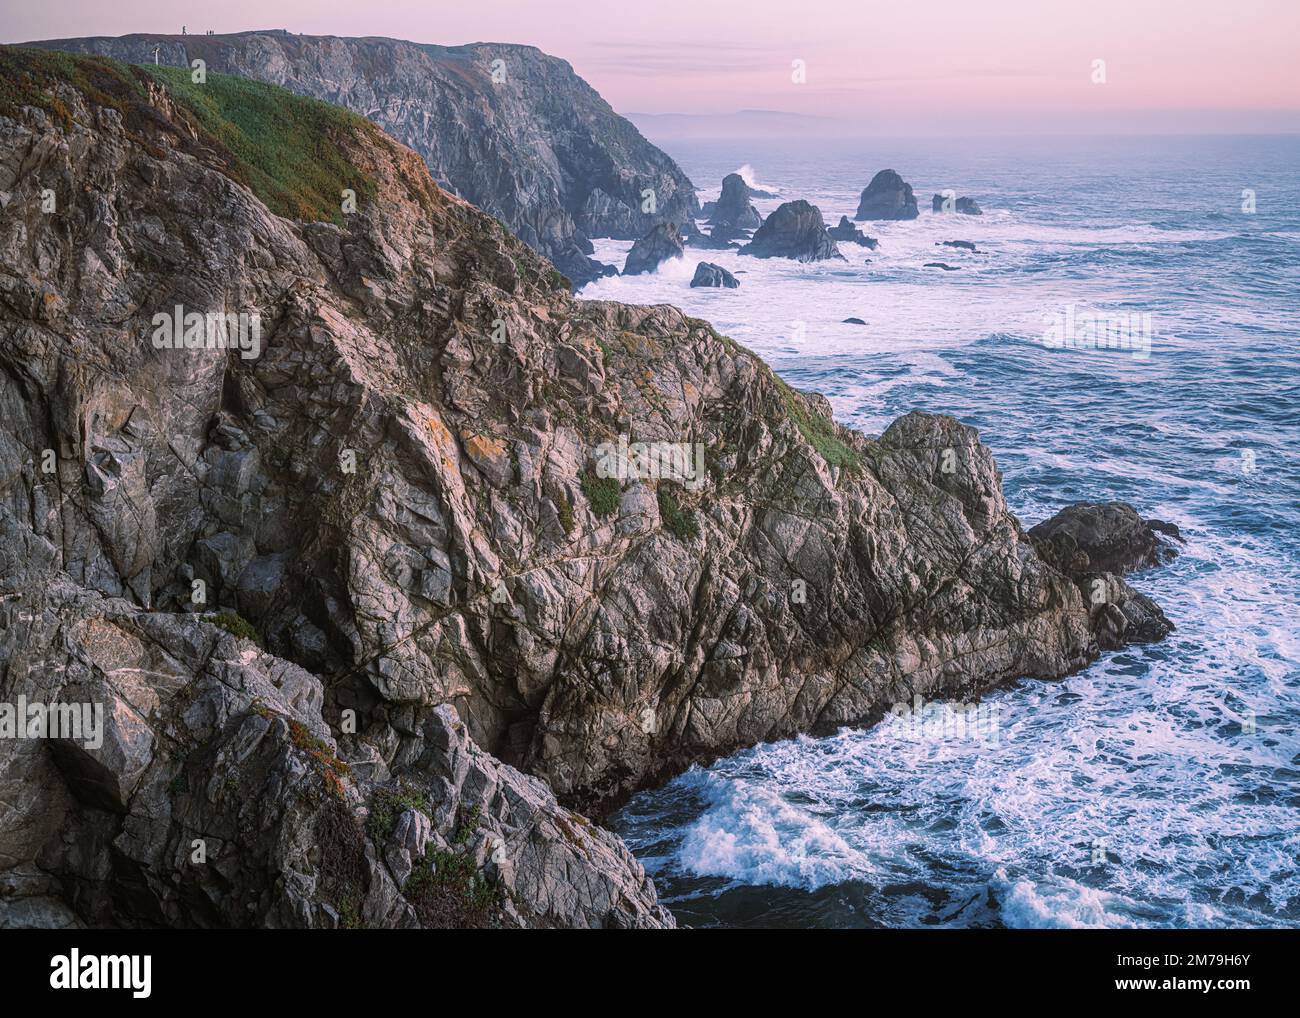 Bodega Bay, kühne und zerklüftete Klippen, nebelrosa Sonnenuntergang, pazifik, Kalifornien Stockfoto